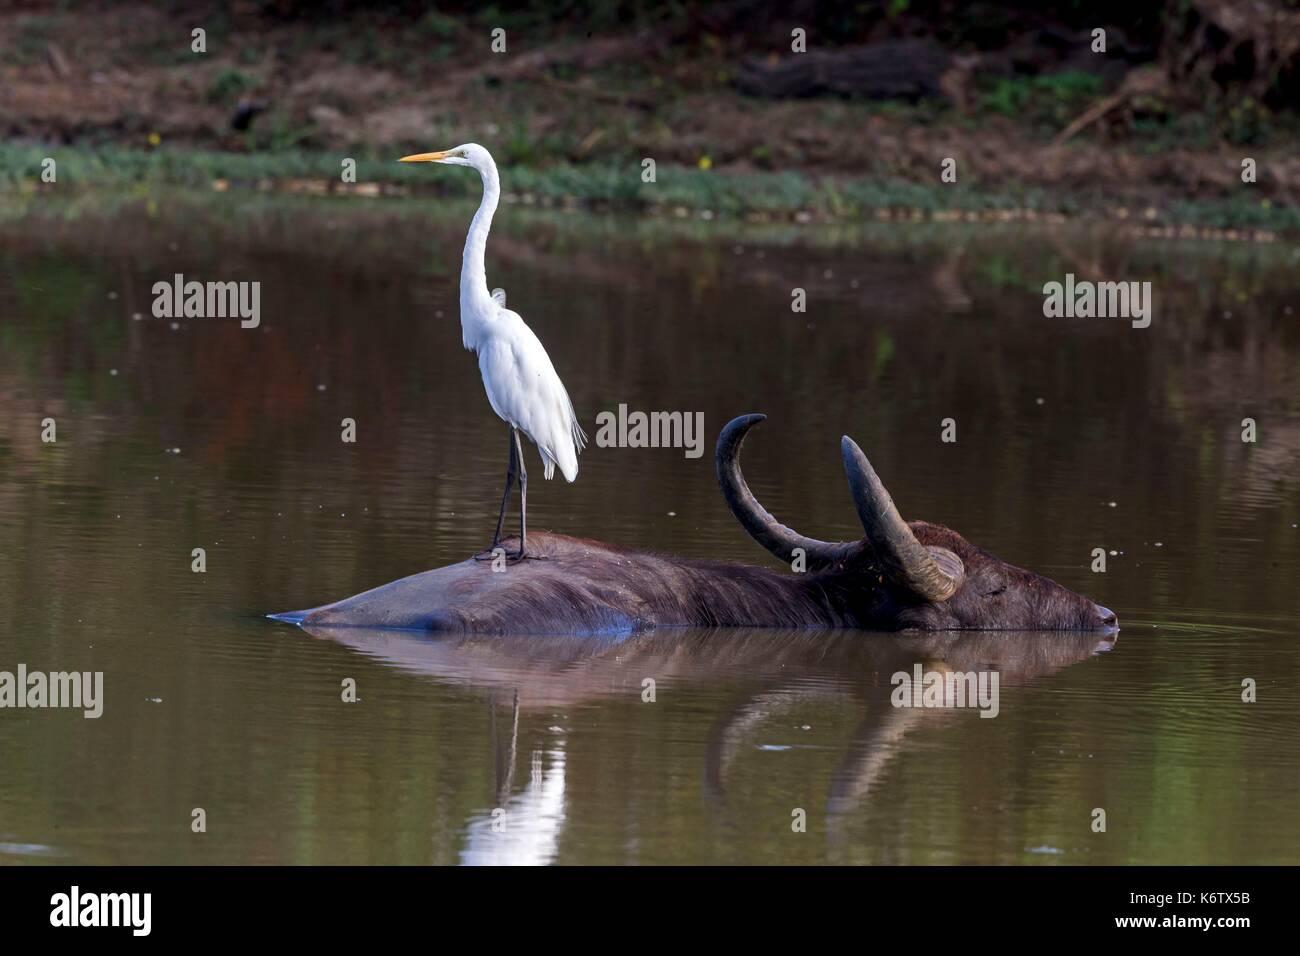 Sri Lanka, Yala national patk, Wild water buffalo or Asian buffalo (Bubalus arnee), resting in the water, with a great egret (Ardea alba) on the back Stock Photo